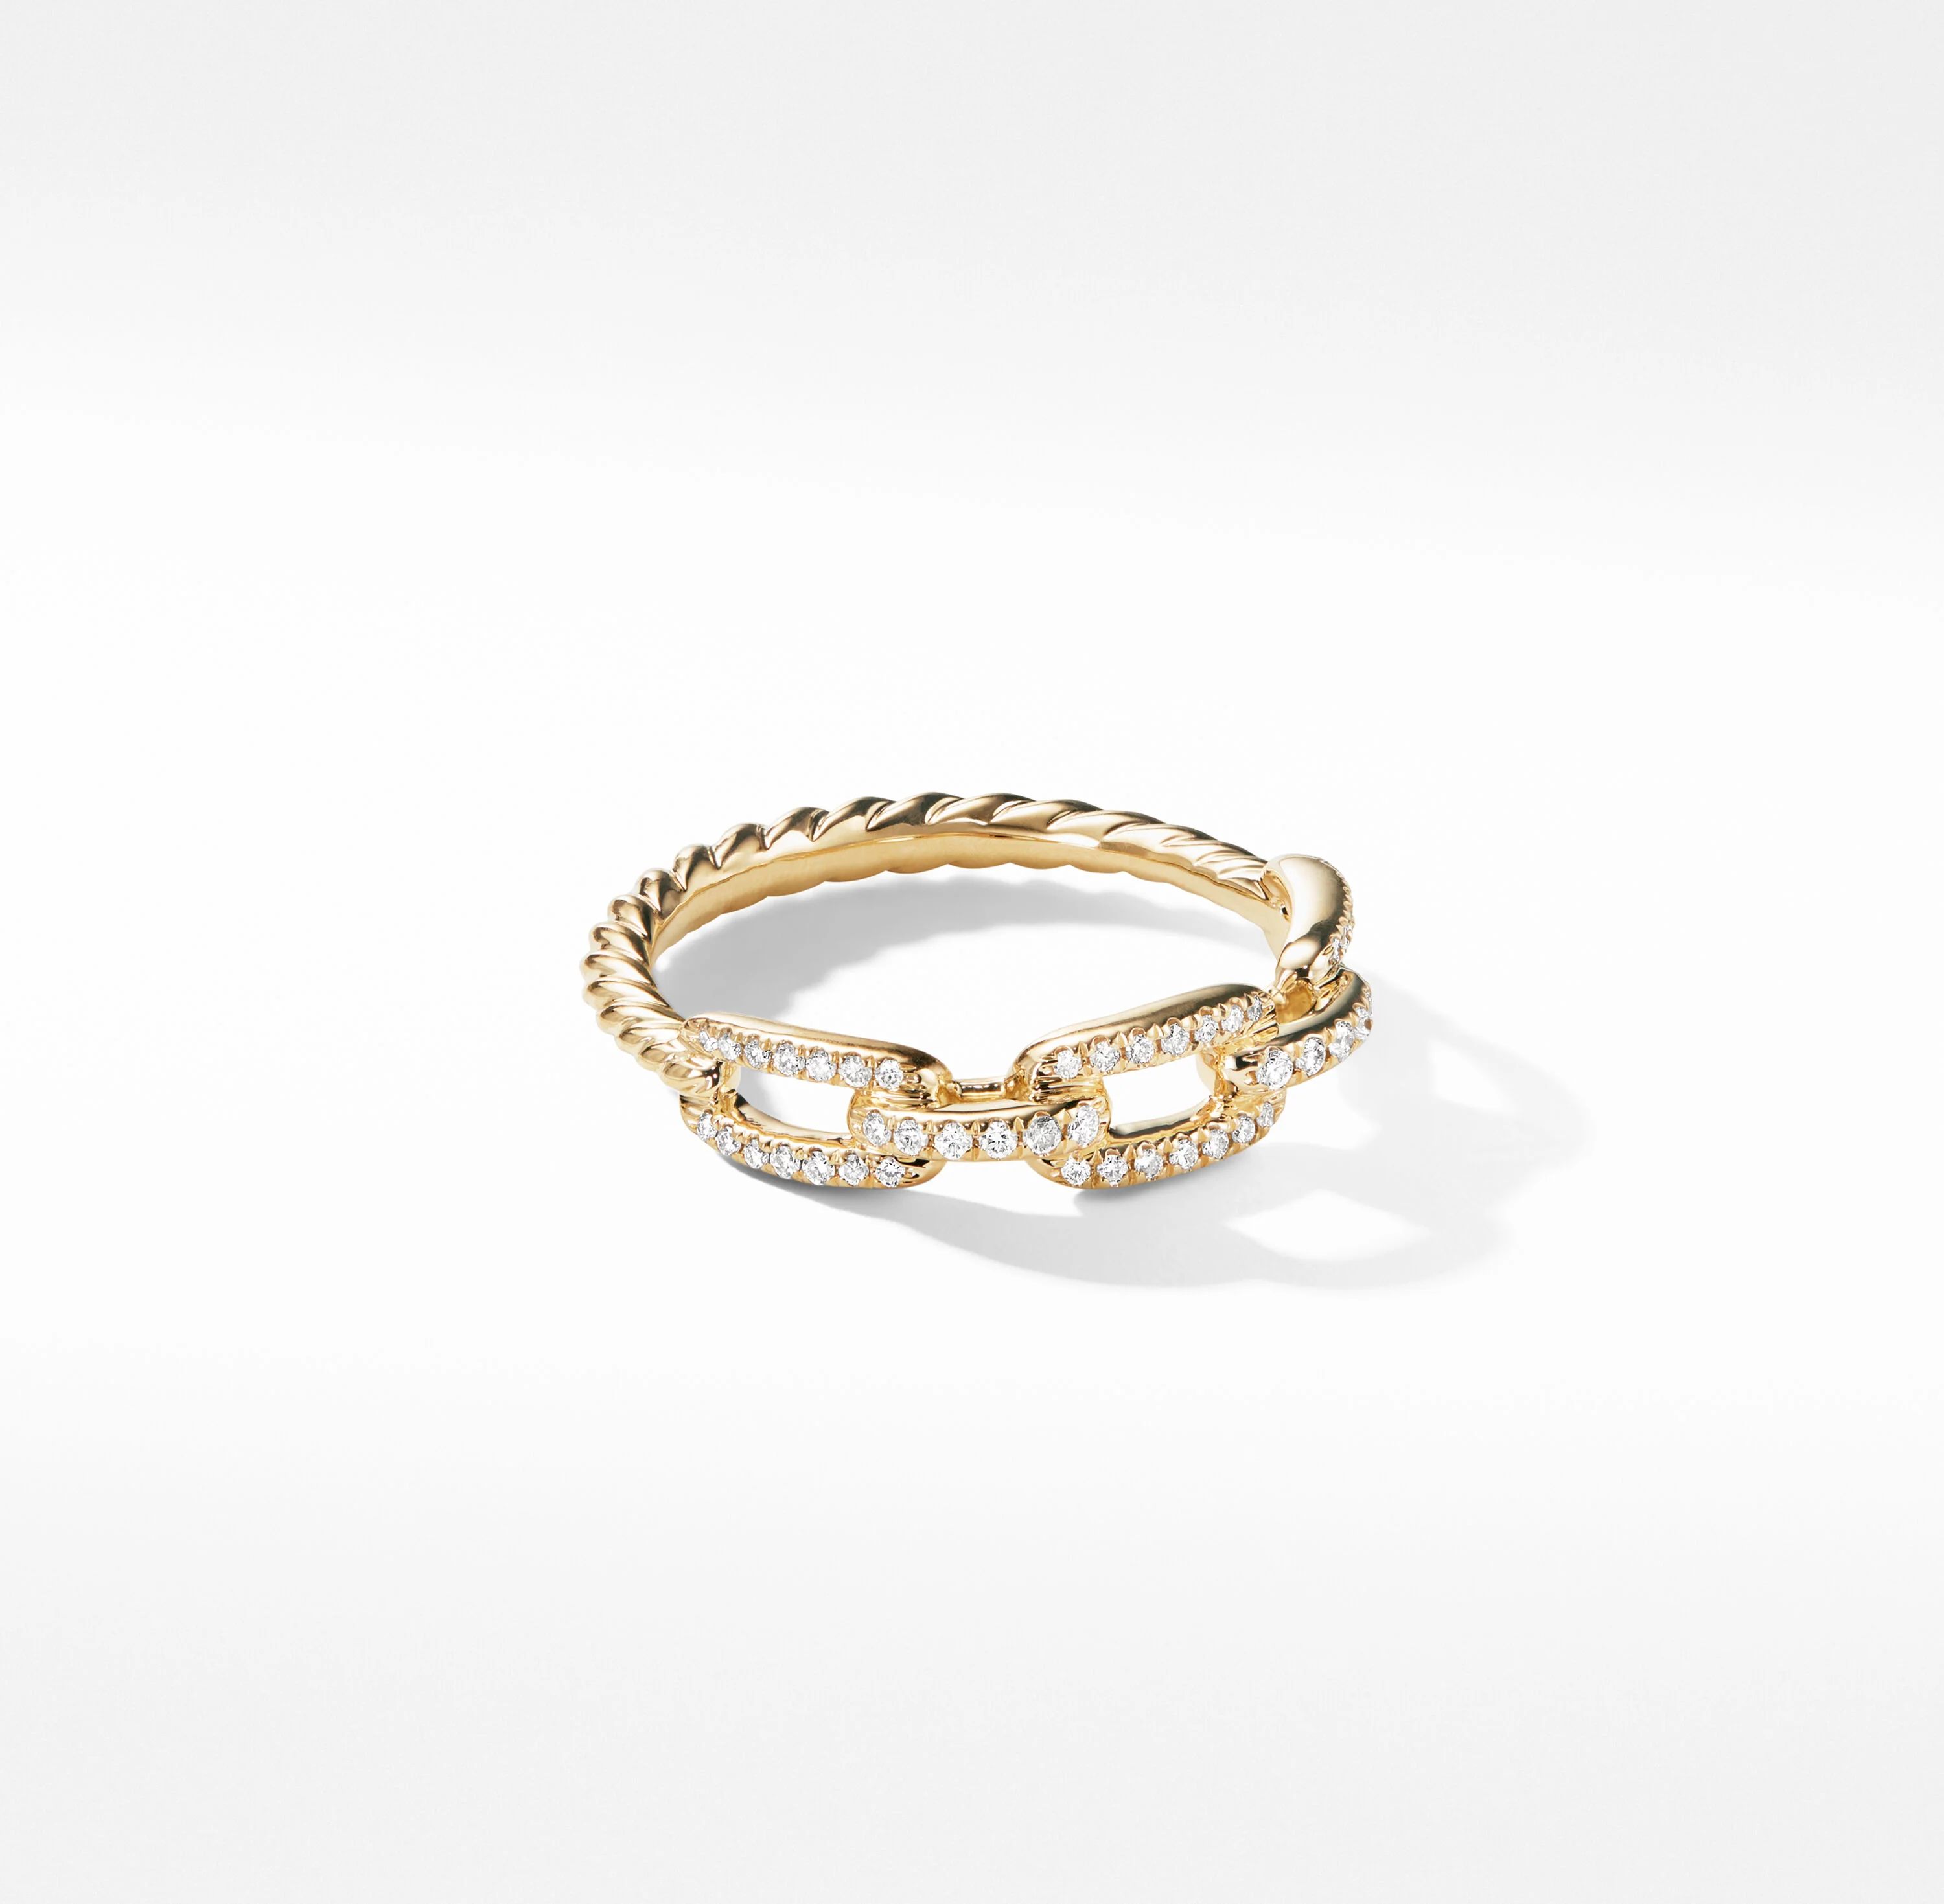 David Yurman | Stax Chain Link Ring in 18K Yellow Gold with Diamonds, 4.5mm | David Yurman